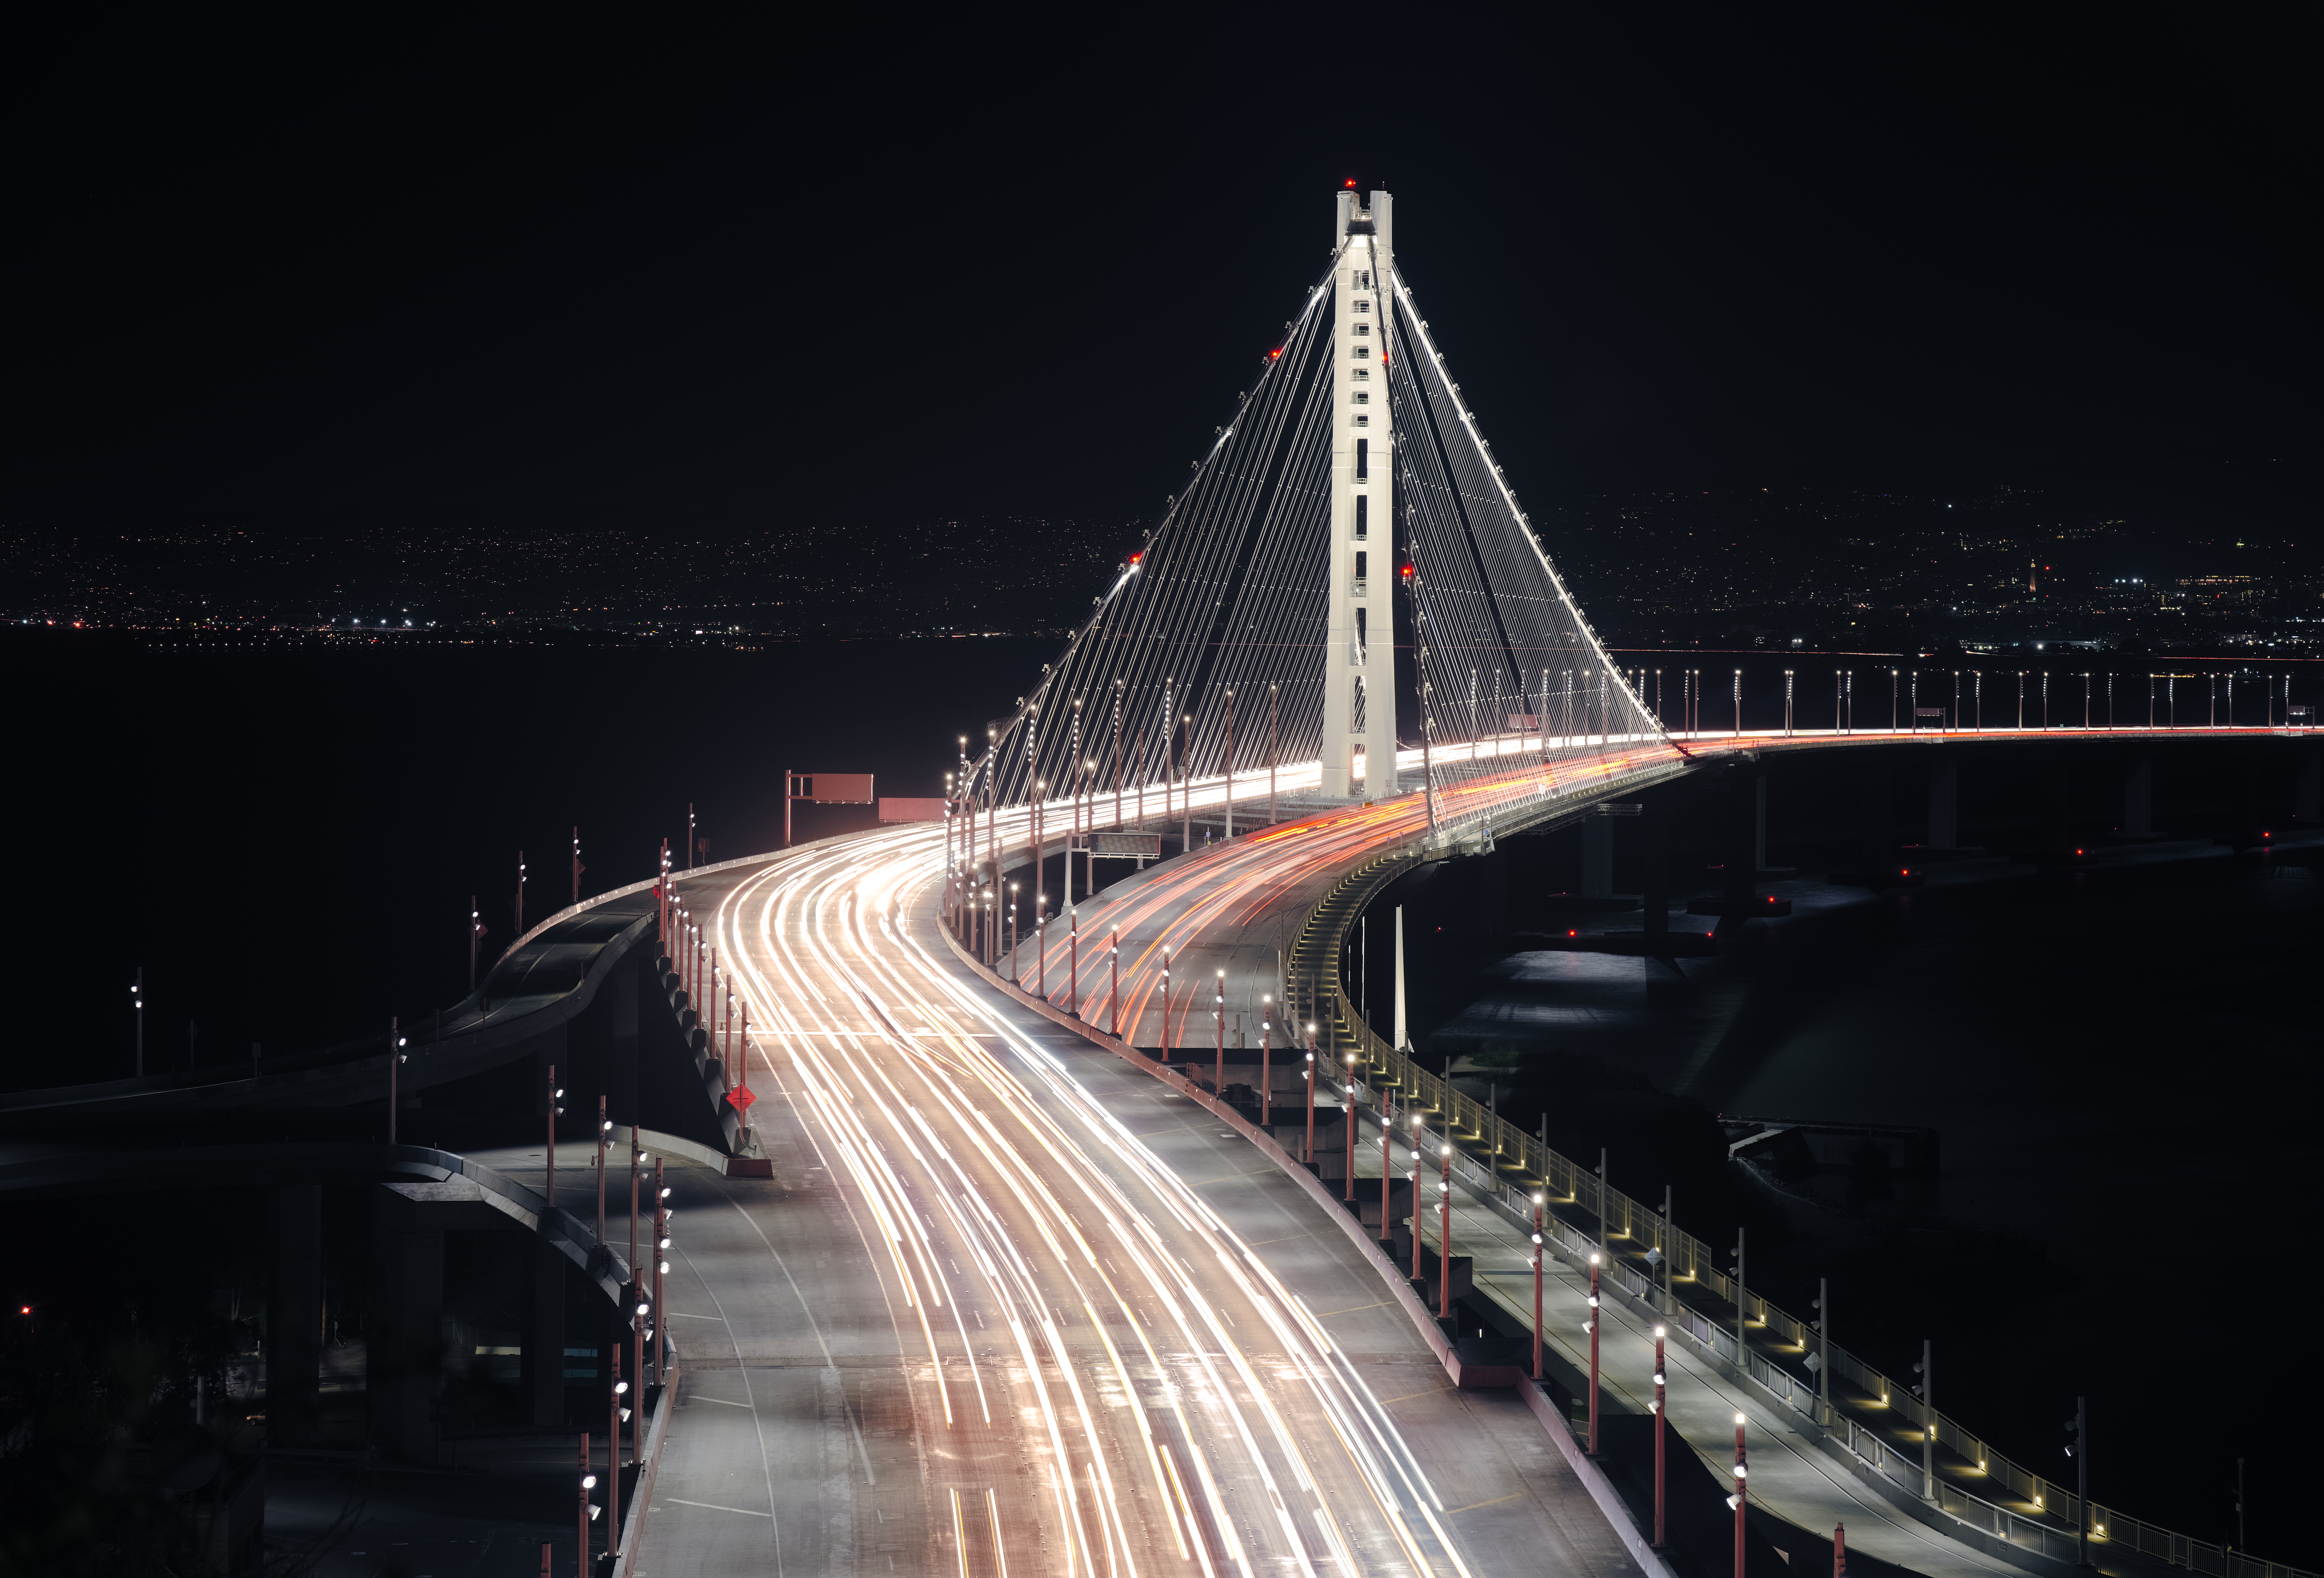 Eastern span of the San Francisco Oakland Bay Bridge at night as seen from Yerba Buena Island by Dllu